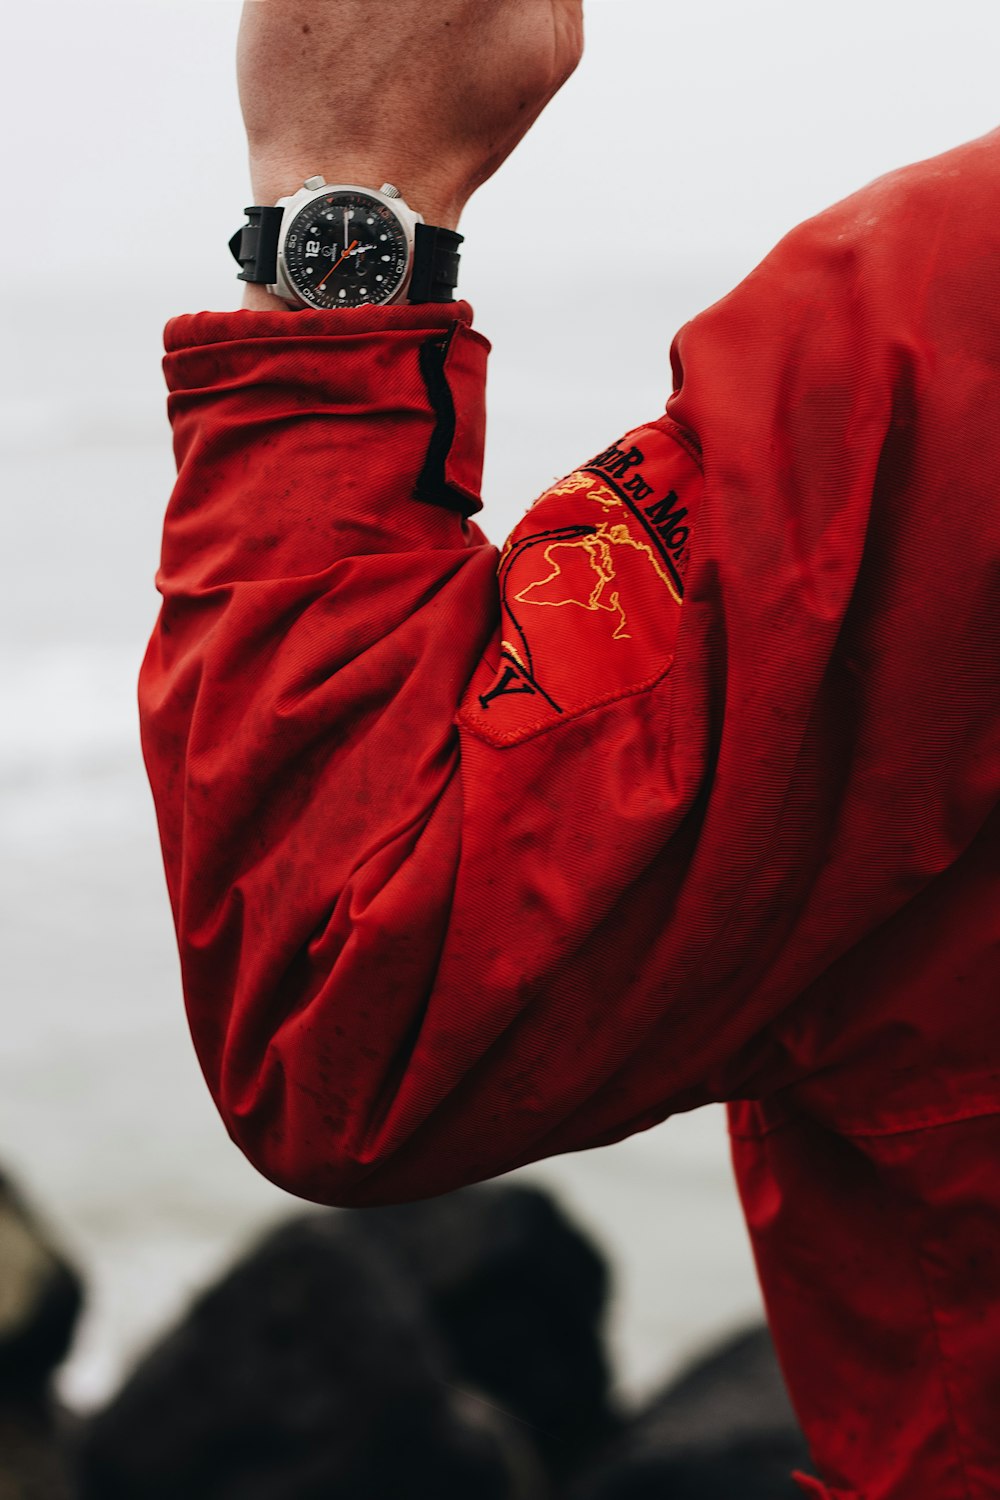 Persona con chaqueta roja con reloj negro y plateado